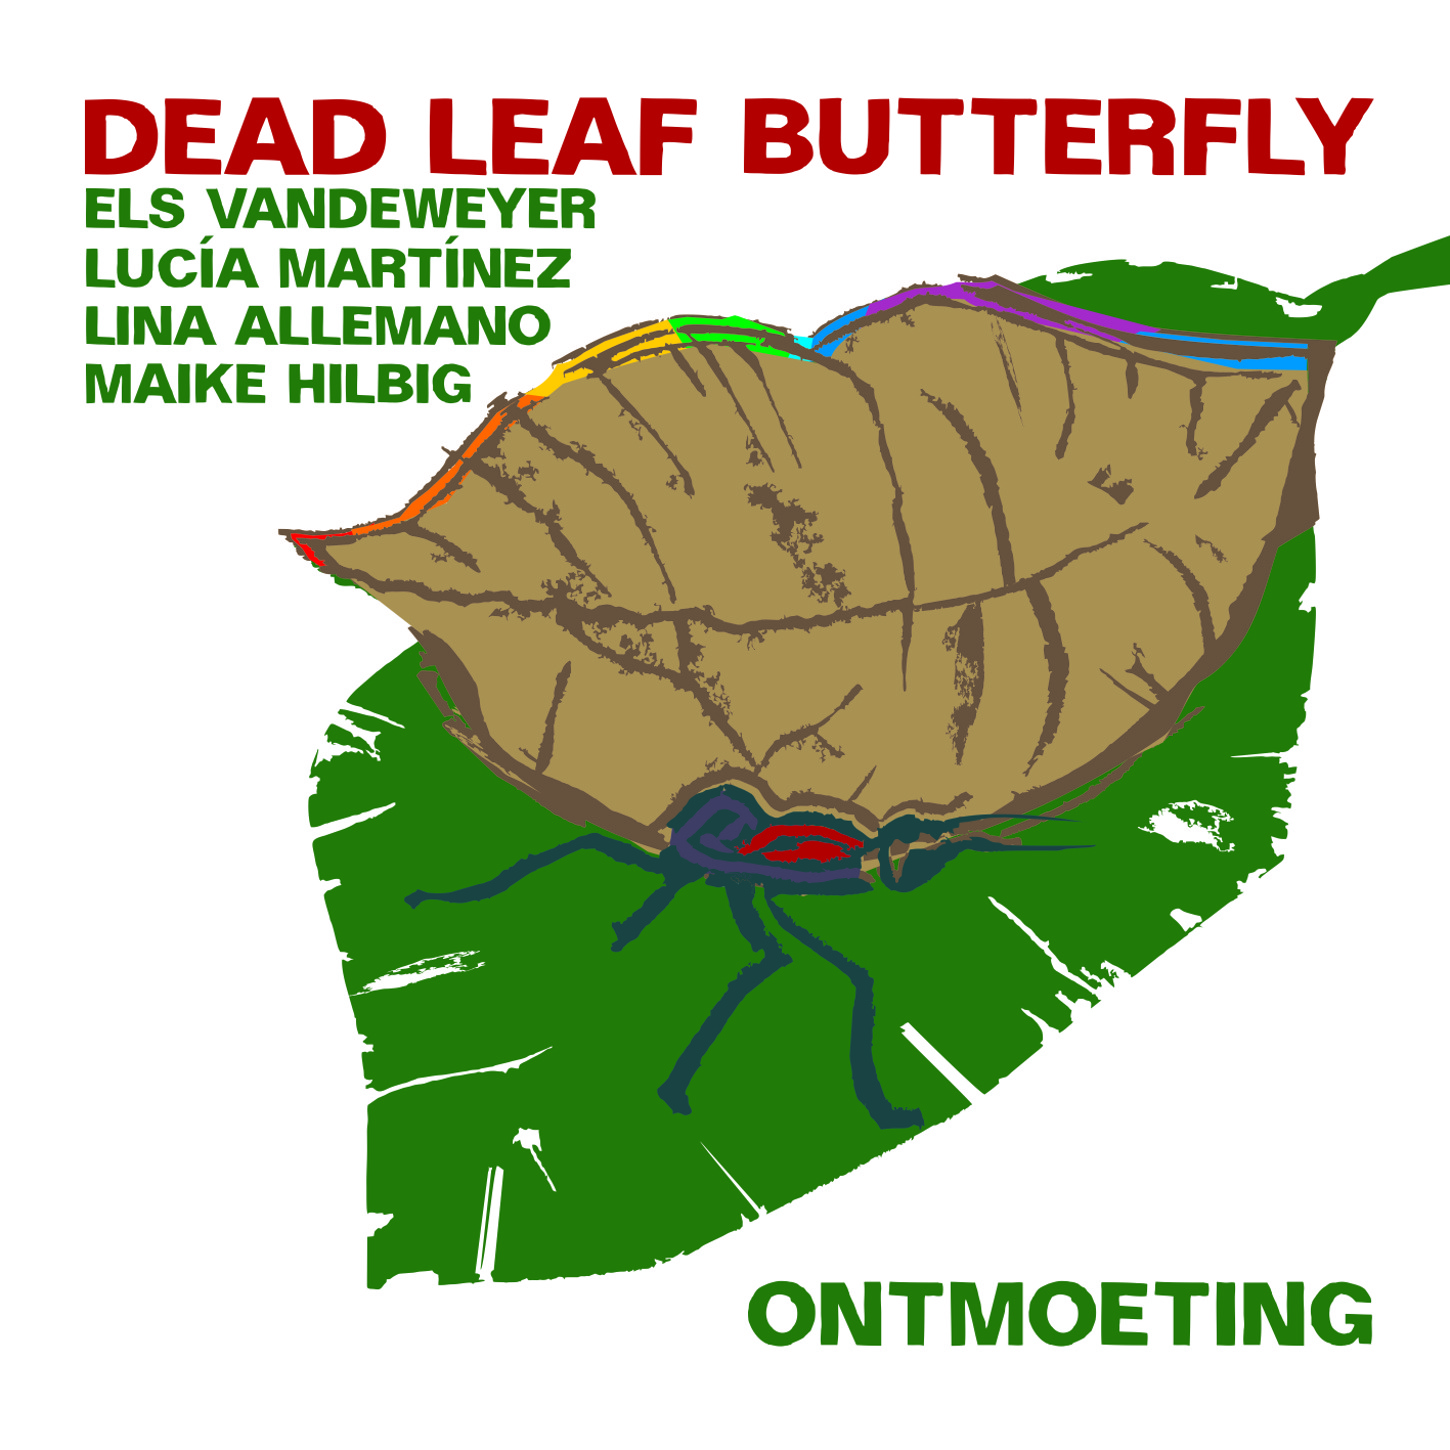 Dead Leaf Butterfly Ontmoeting